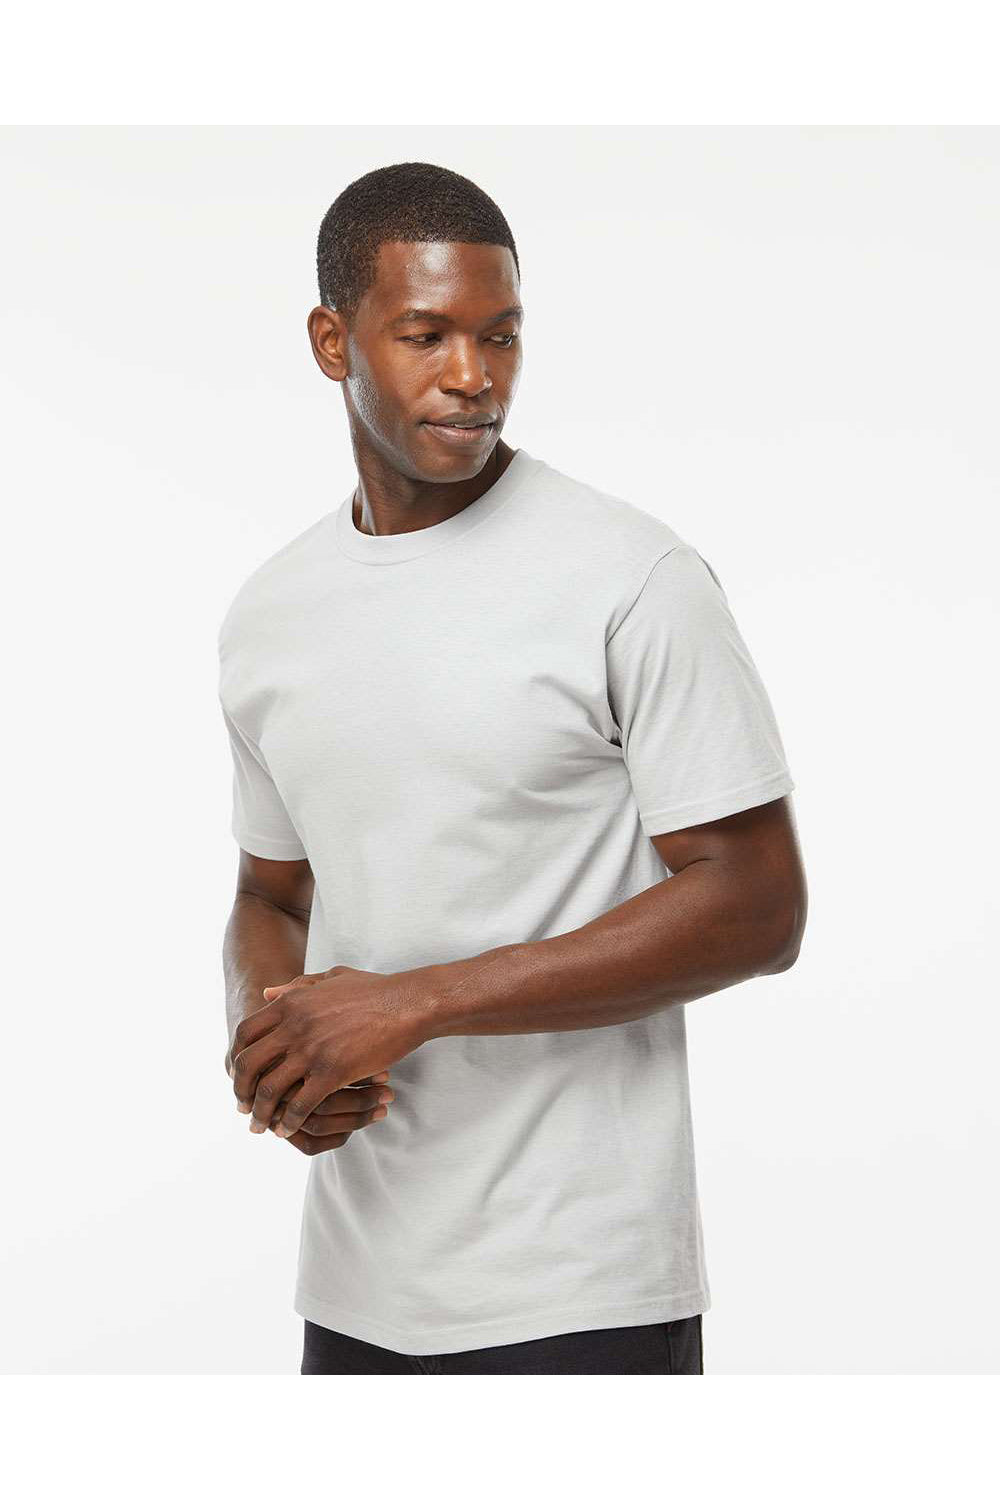 M&O 4800 Mens Gold Soft Touch Short Sleeve Crewneck T-Shirt Platinum Grey Model Side